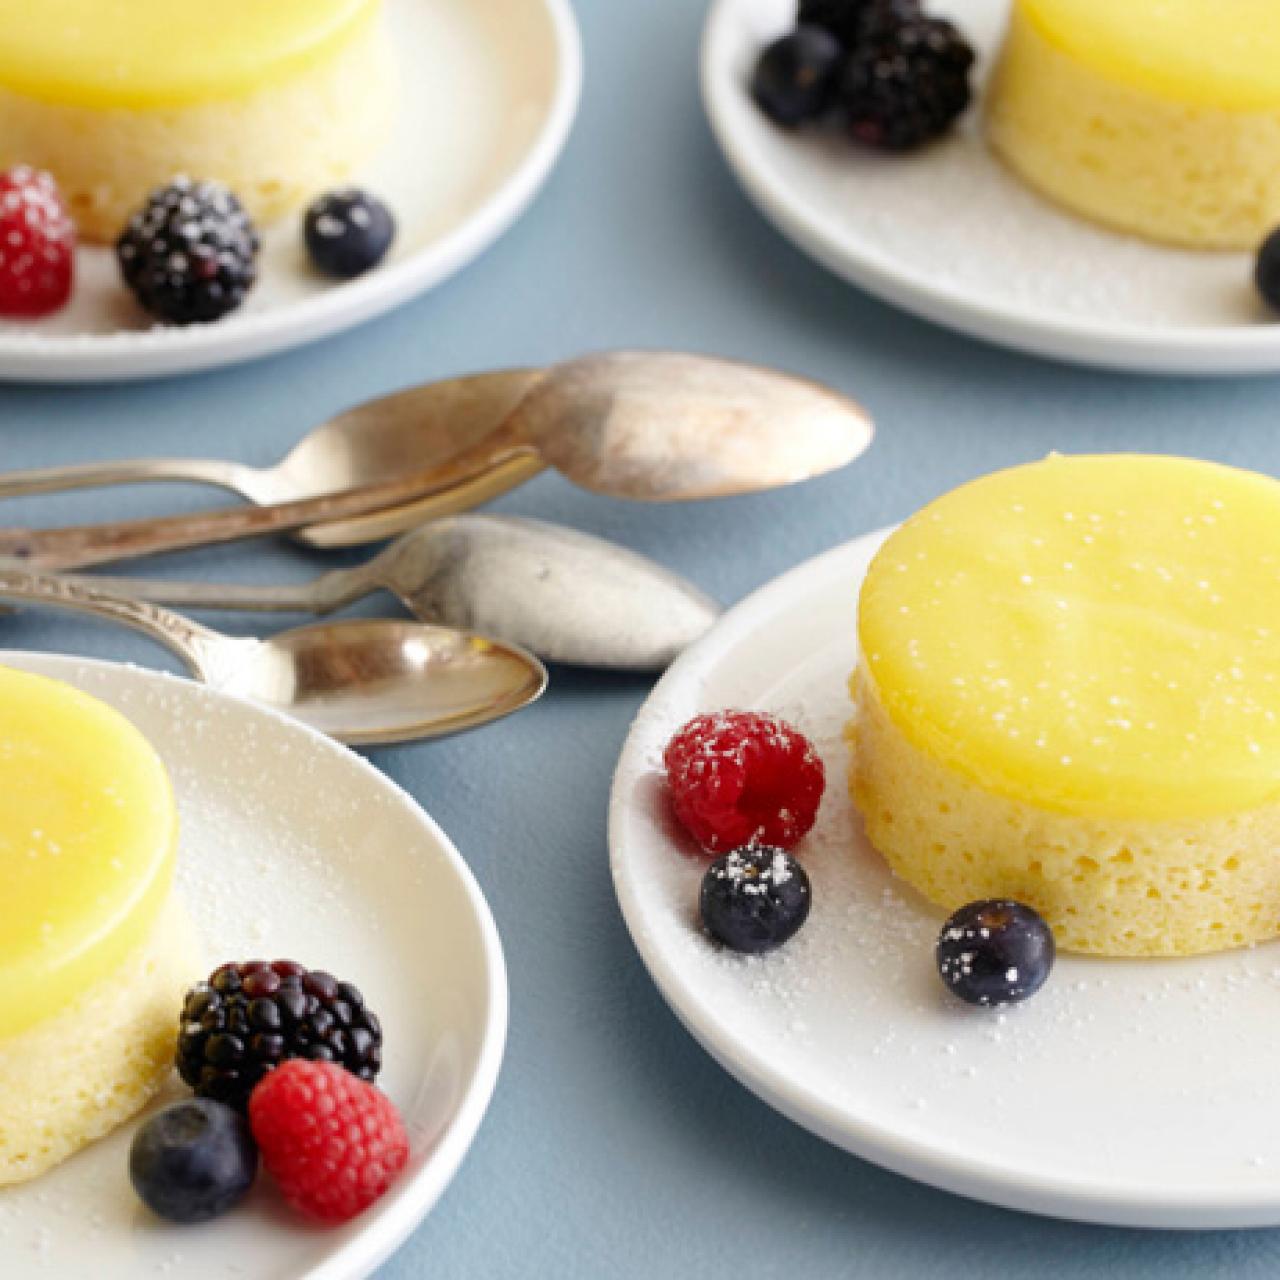 https://food.fnr.sndimg.com/content/dam/images/food/fullset/2008/5/4/0/TU0505_Lemon-Pudding-Cake-with-Berries.jpg.rend.hgtvcom.1280.1280.suffix/1371585698439.jpeg